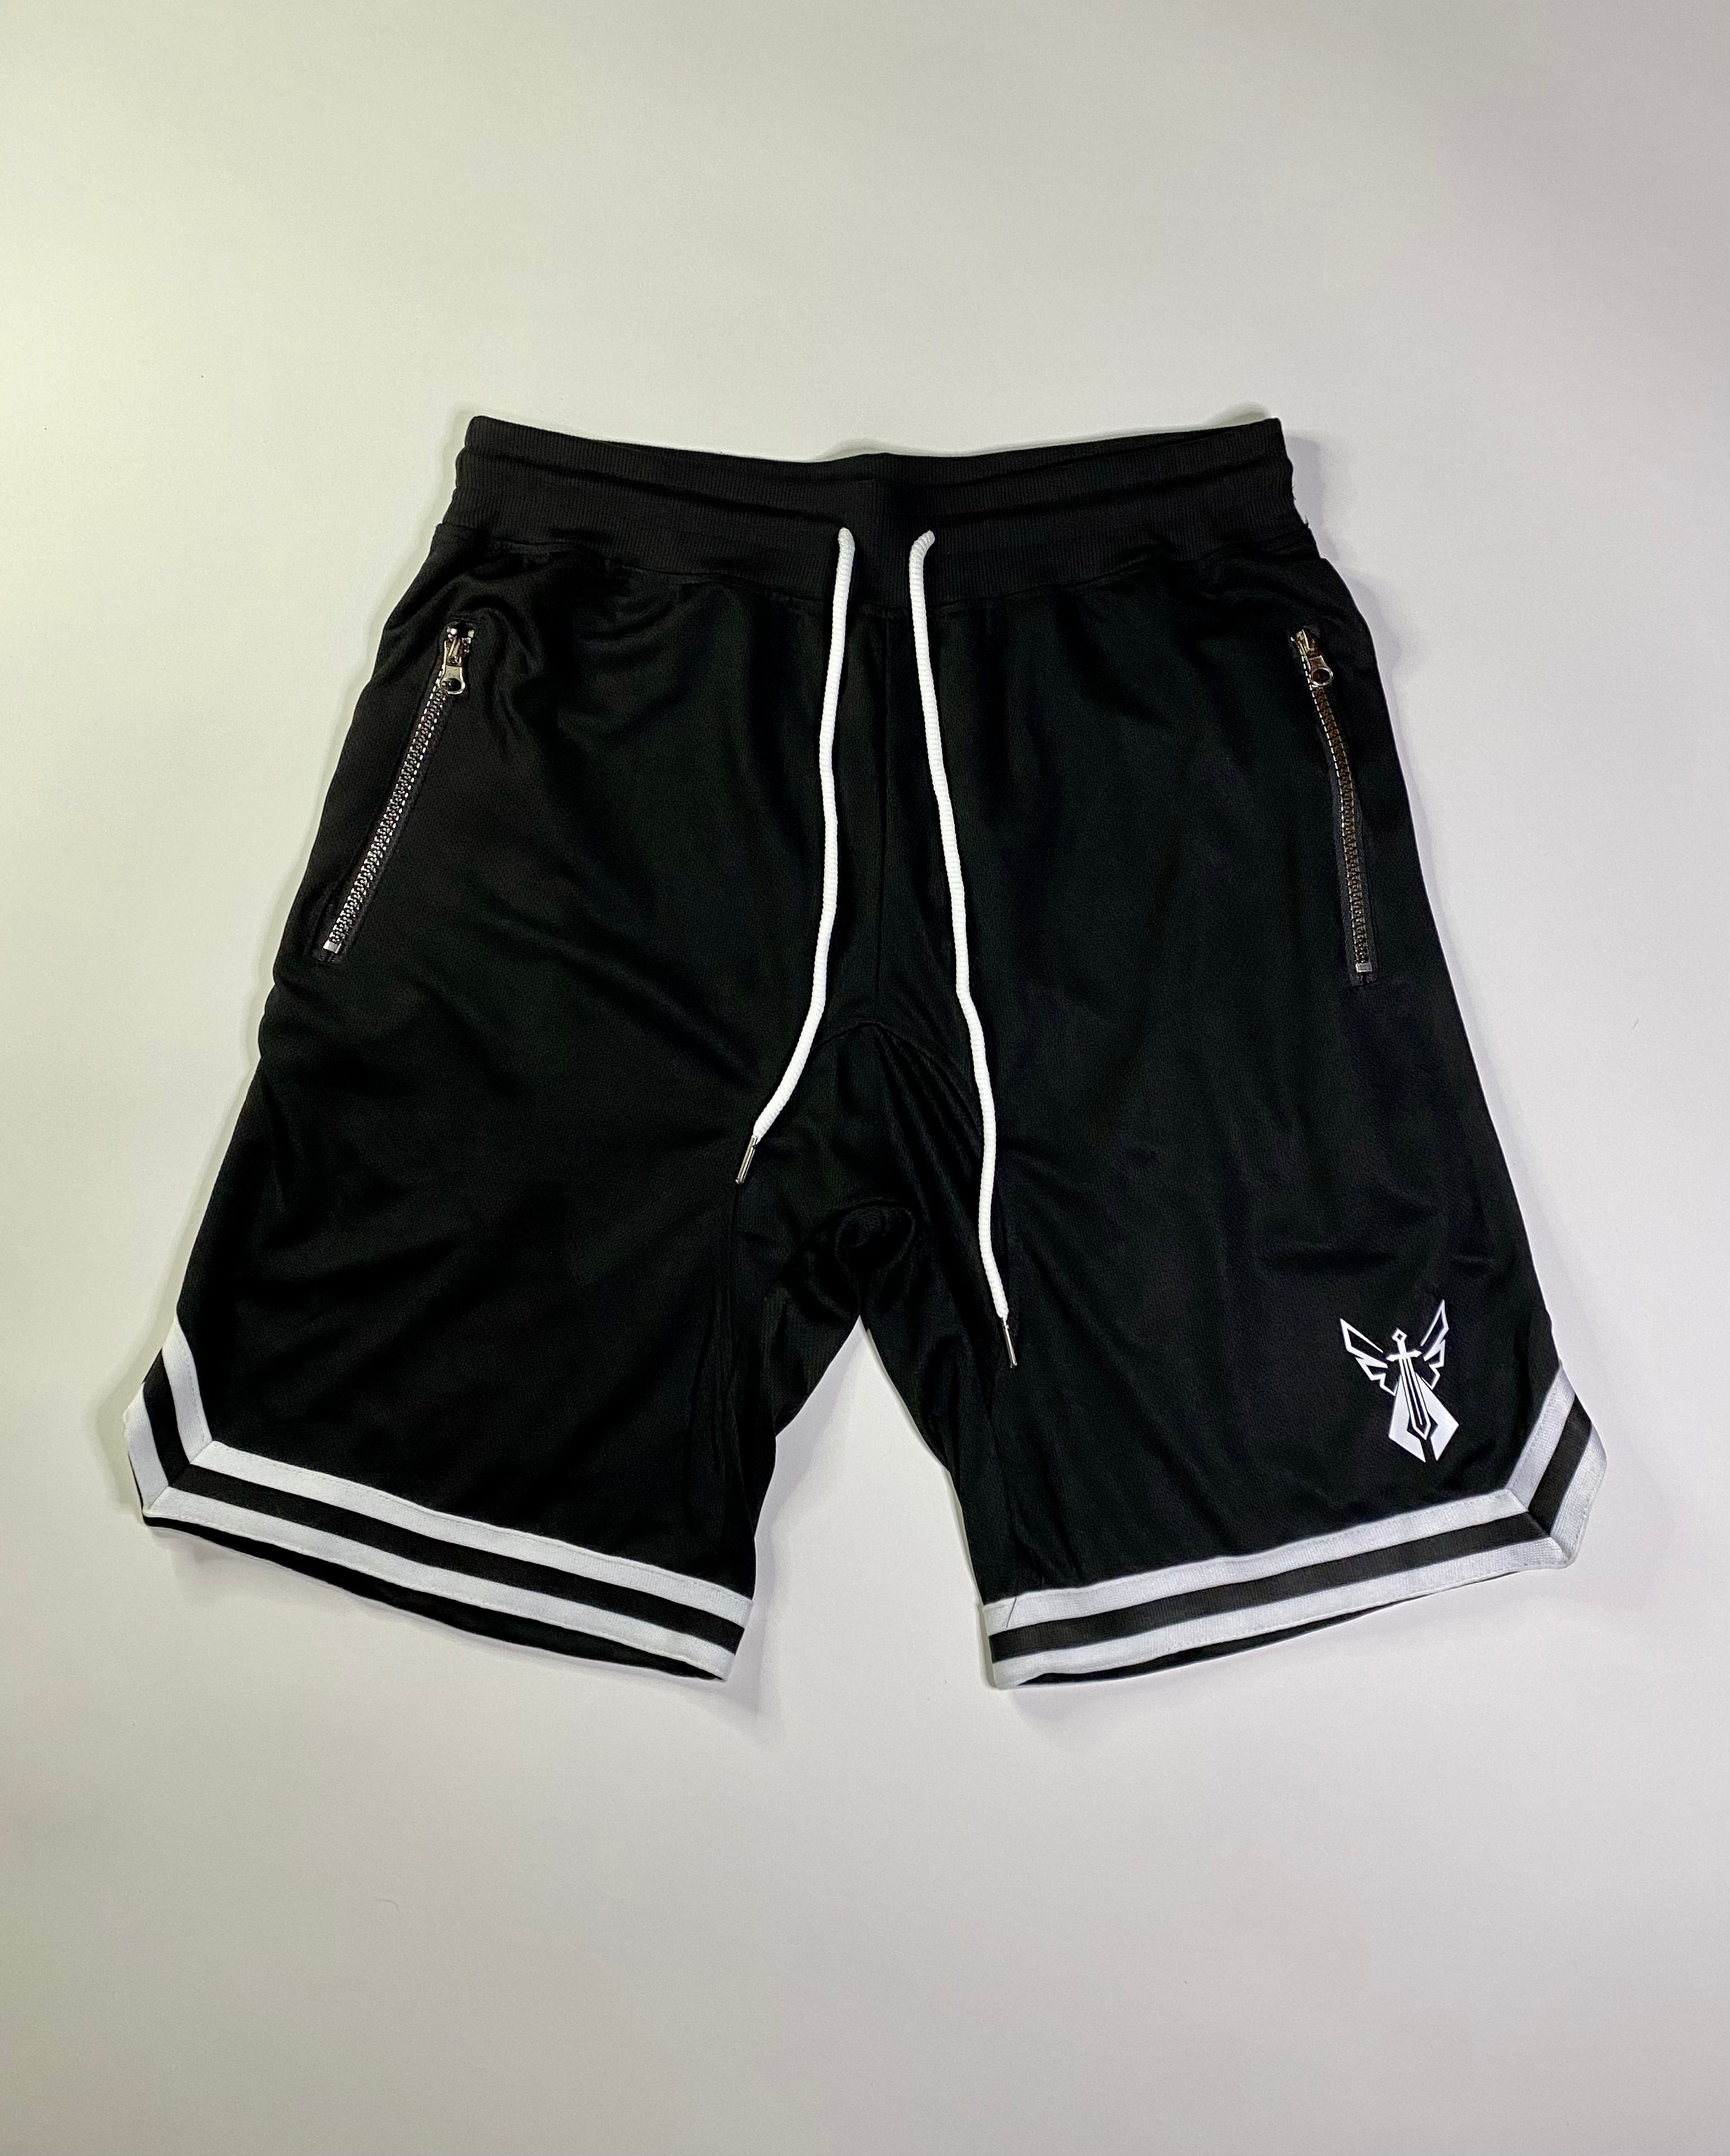 Overlay Side Lace/ Mesh Shorts (Black & White), FUNFIT